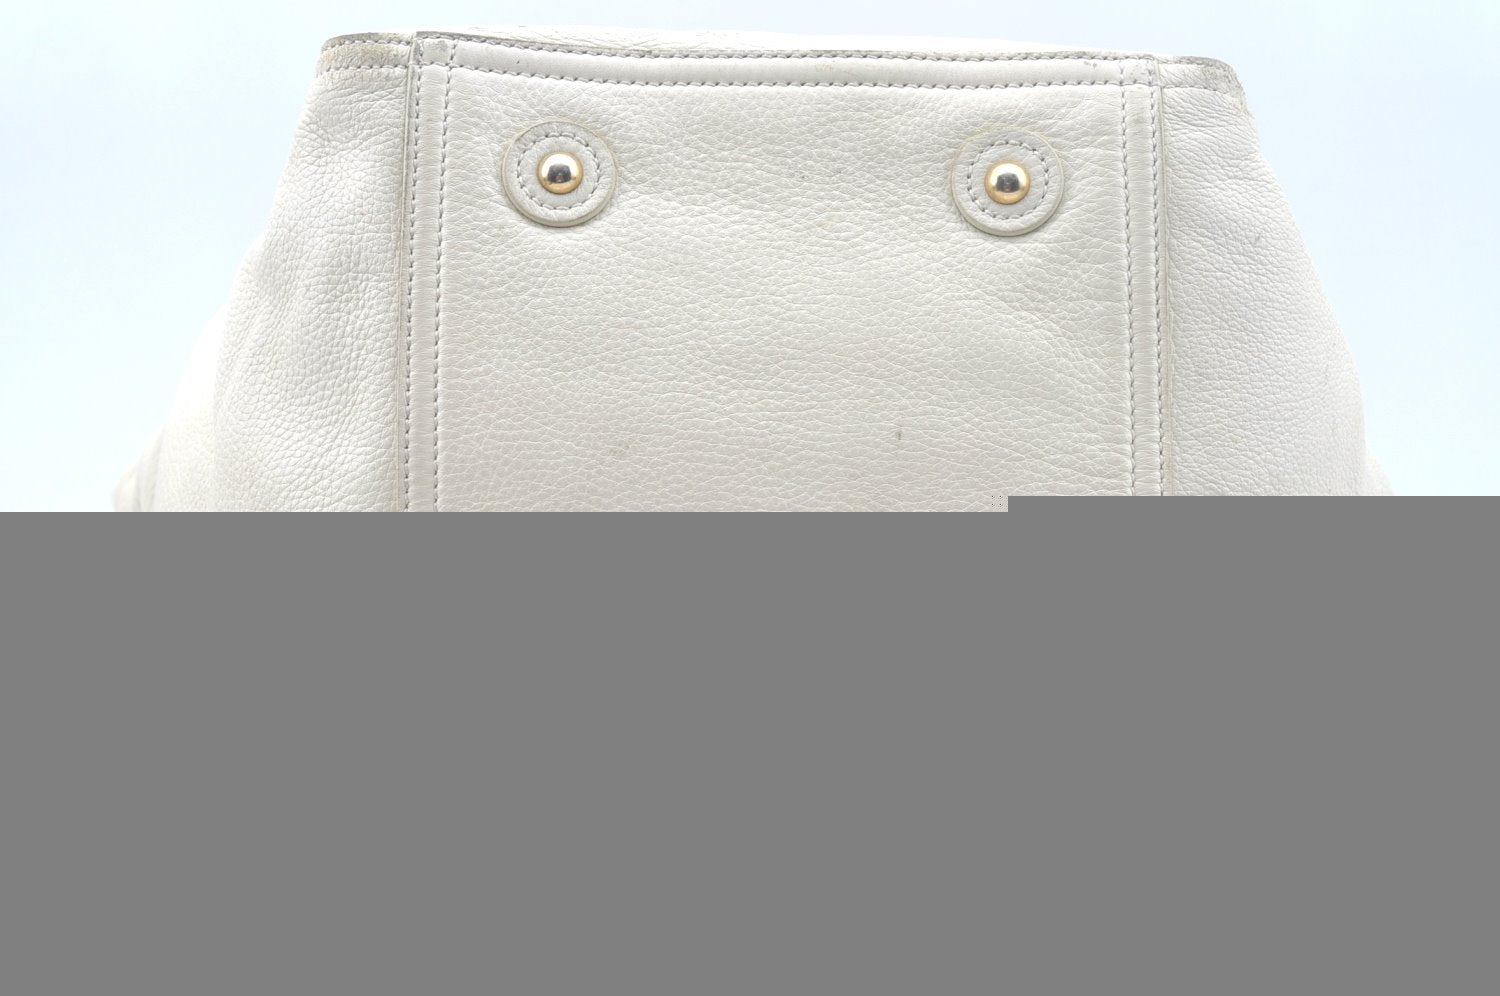 Authentic YVES SAINT LAURENT Shoulder Tote Bag Leather White K9857